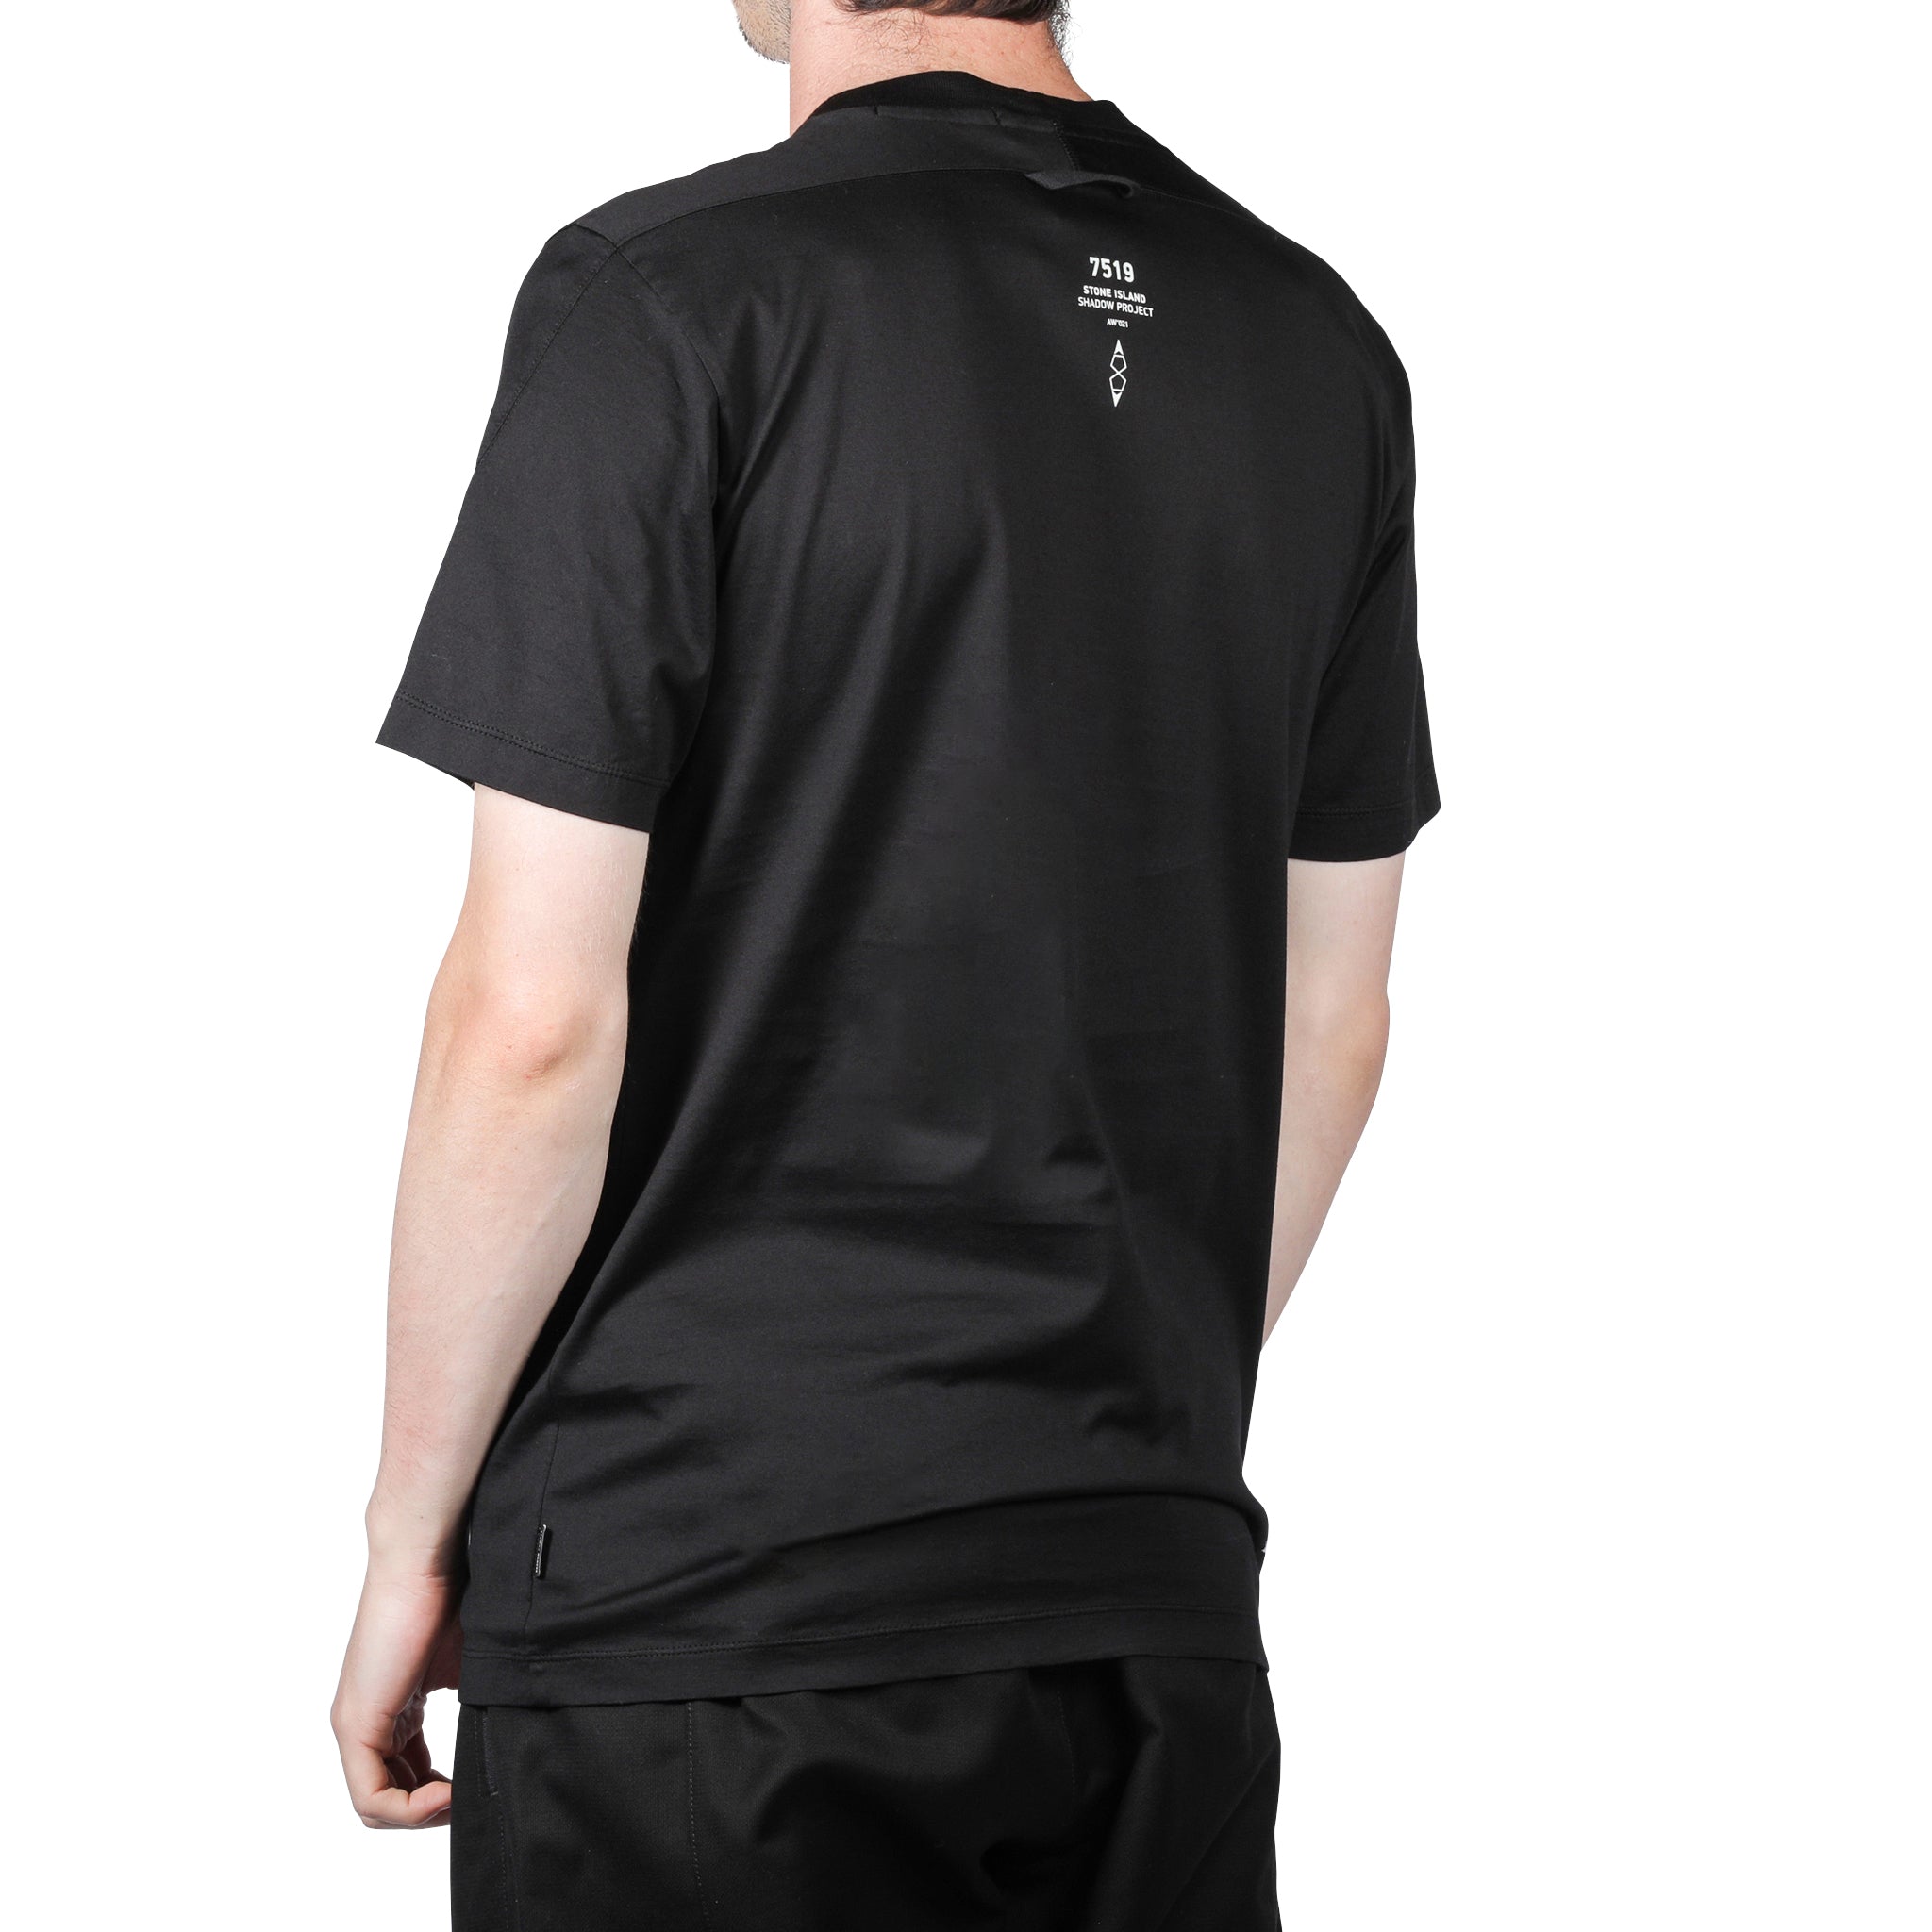 Stone Island Shadow Project Mercerized Jersey Garment Dyed T-Shirt Black